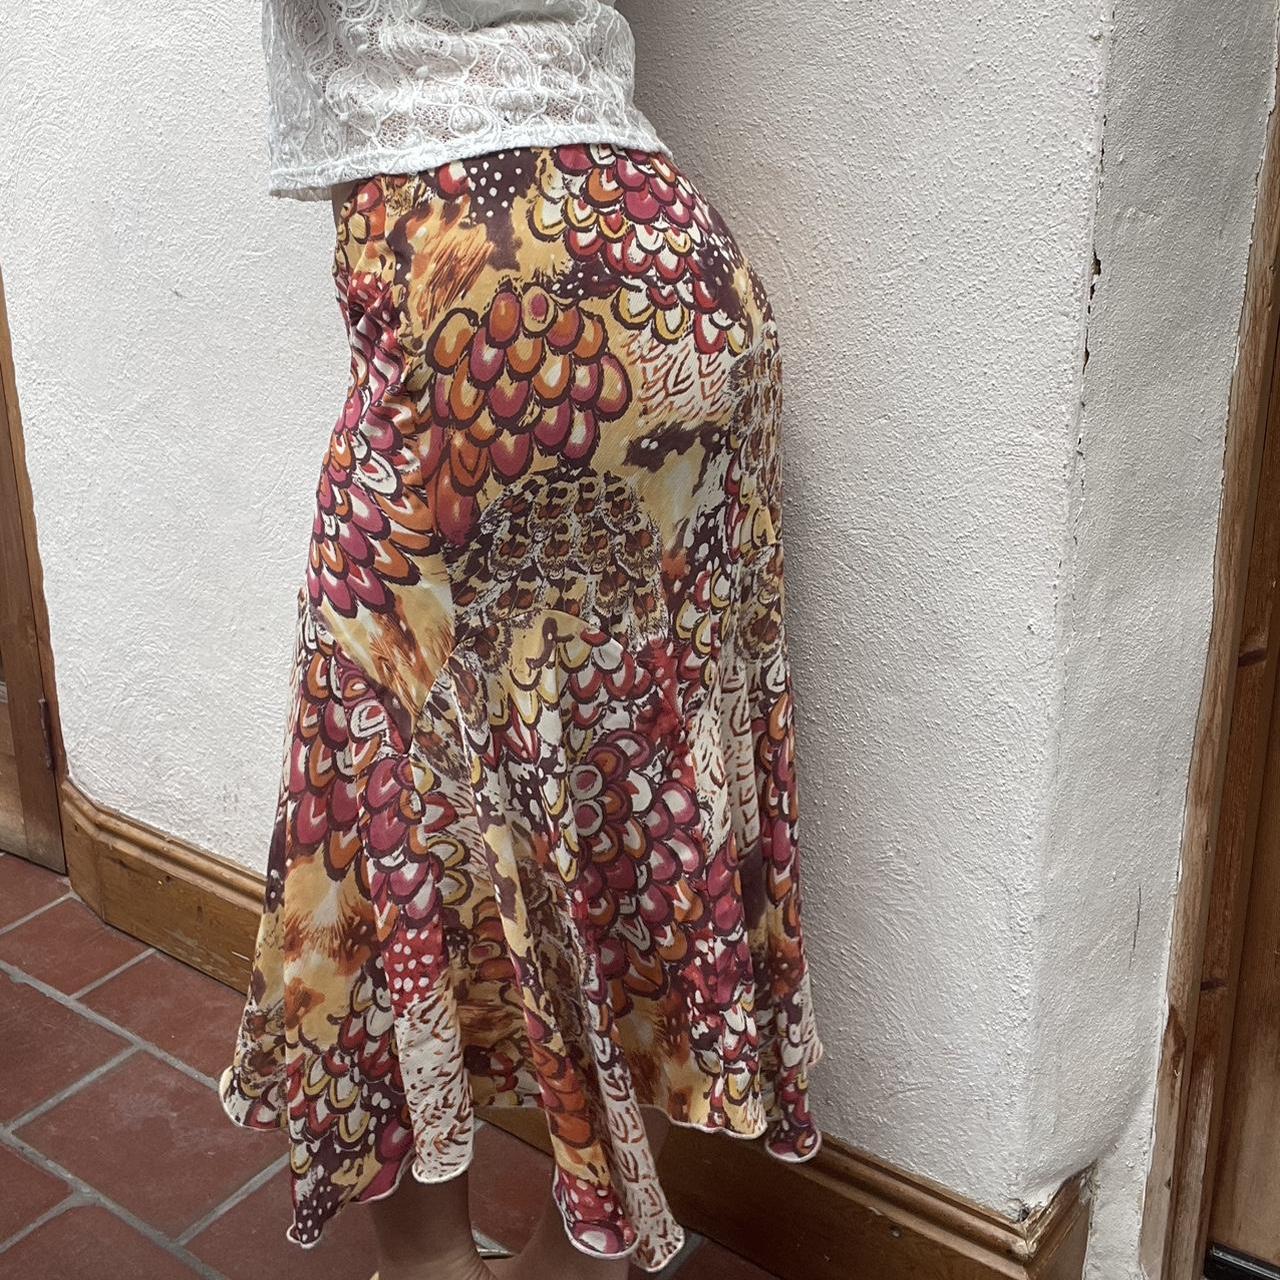 Maxi skirt